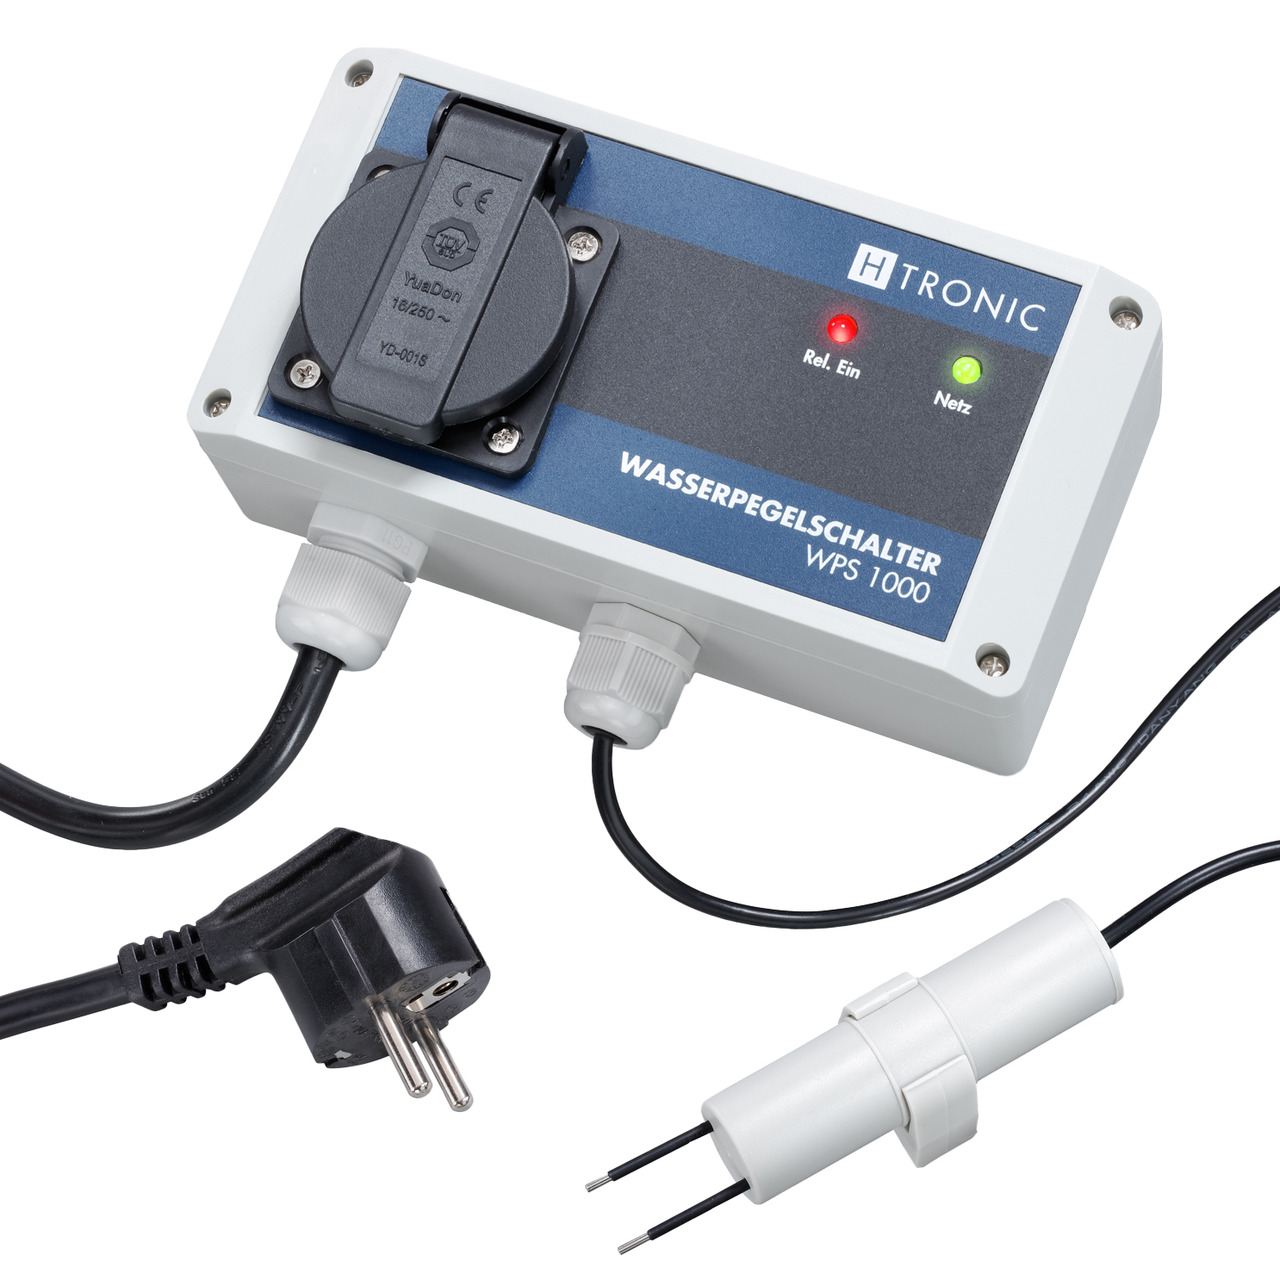 H-Tronic Wasserpegelschalter WPS 1000 V2 mit 10 Meter Sensorkabel unter Haustechnik